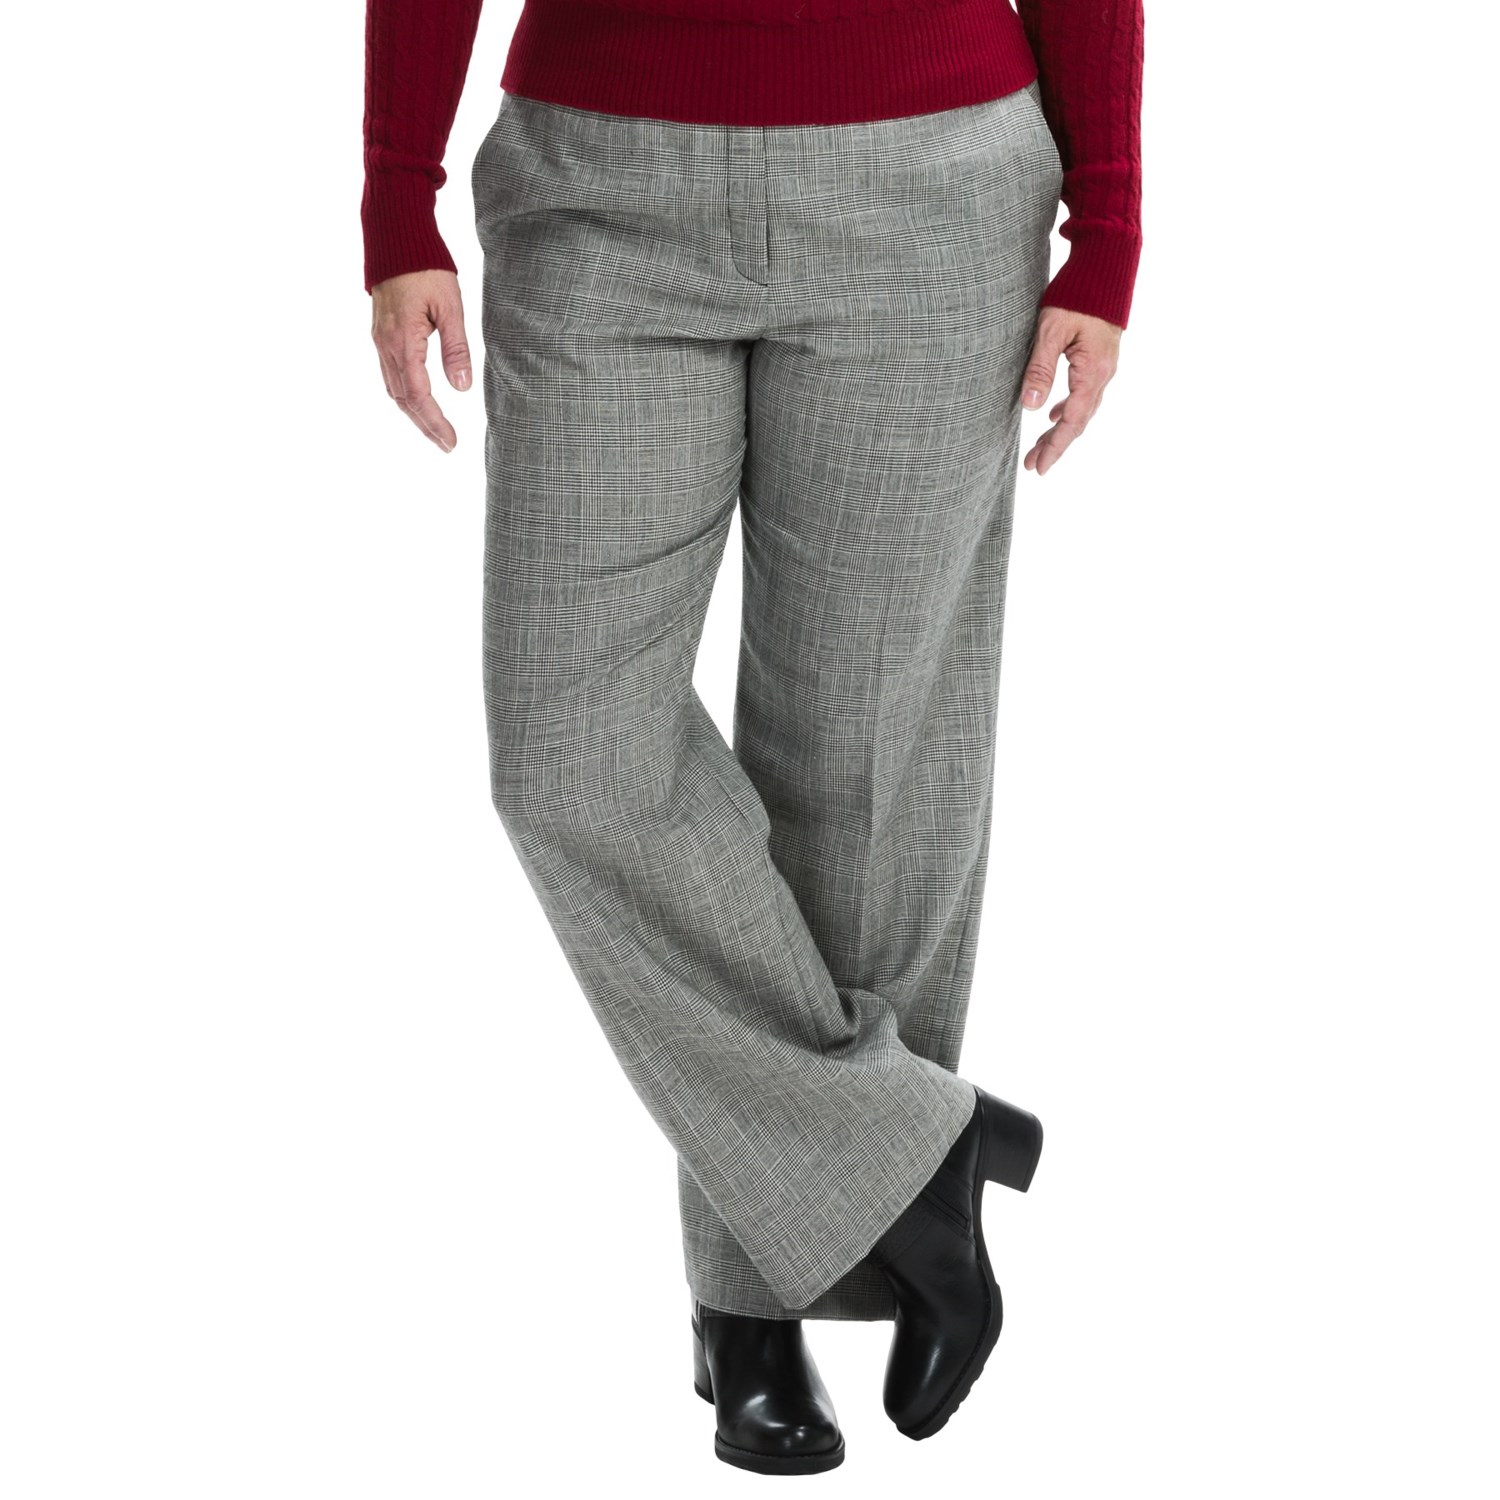 Pendleton Wool Chic Street Pants (For Plus Size Women) - Save 70%